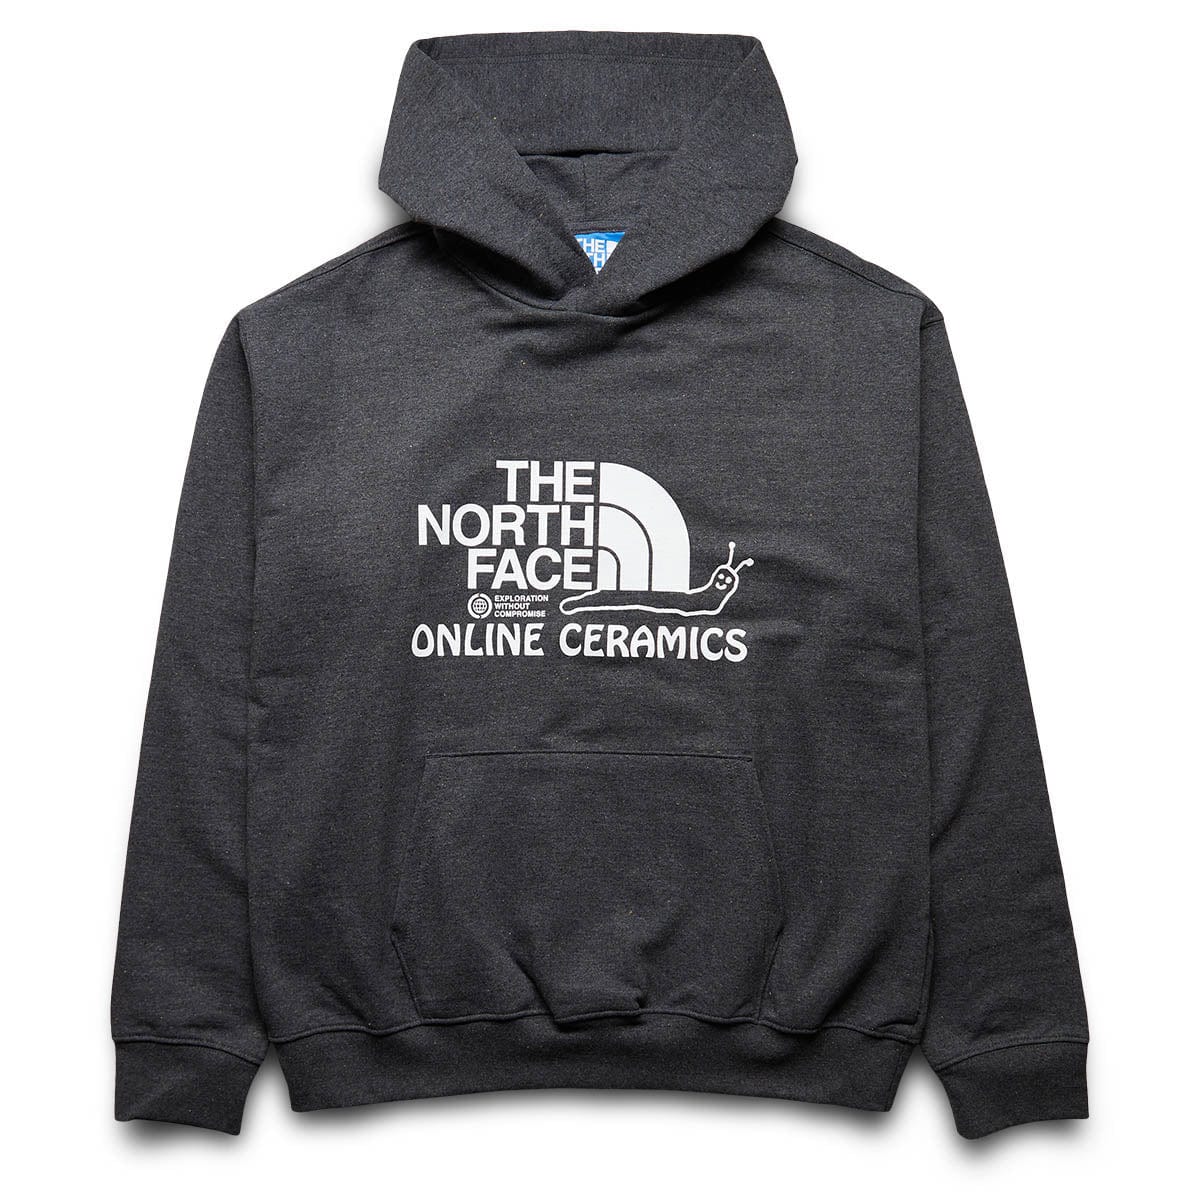 The North Face Hoodies & Sweatshirts X ONLINE CERAMICS GRAPHIC HOODIE